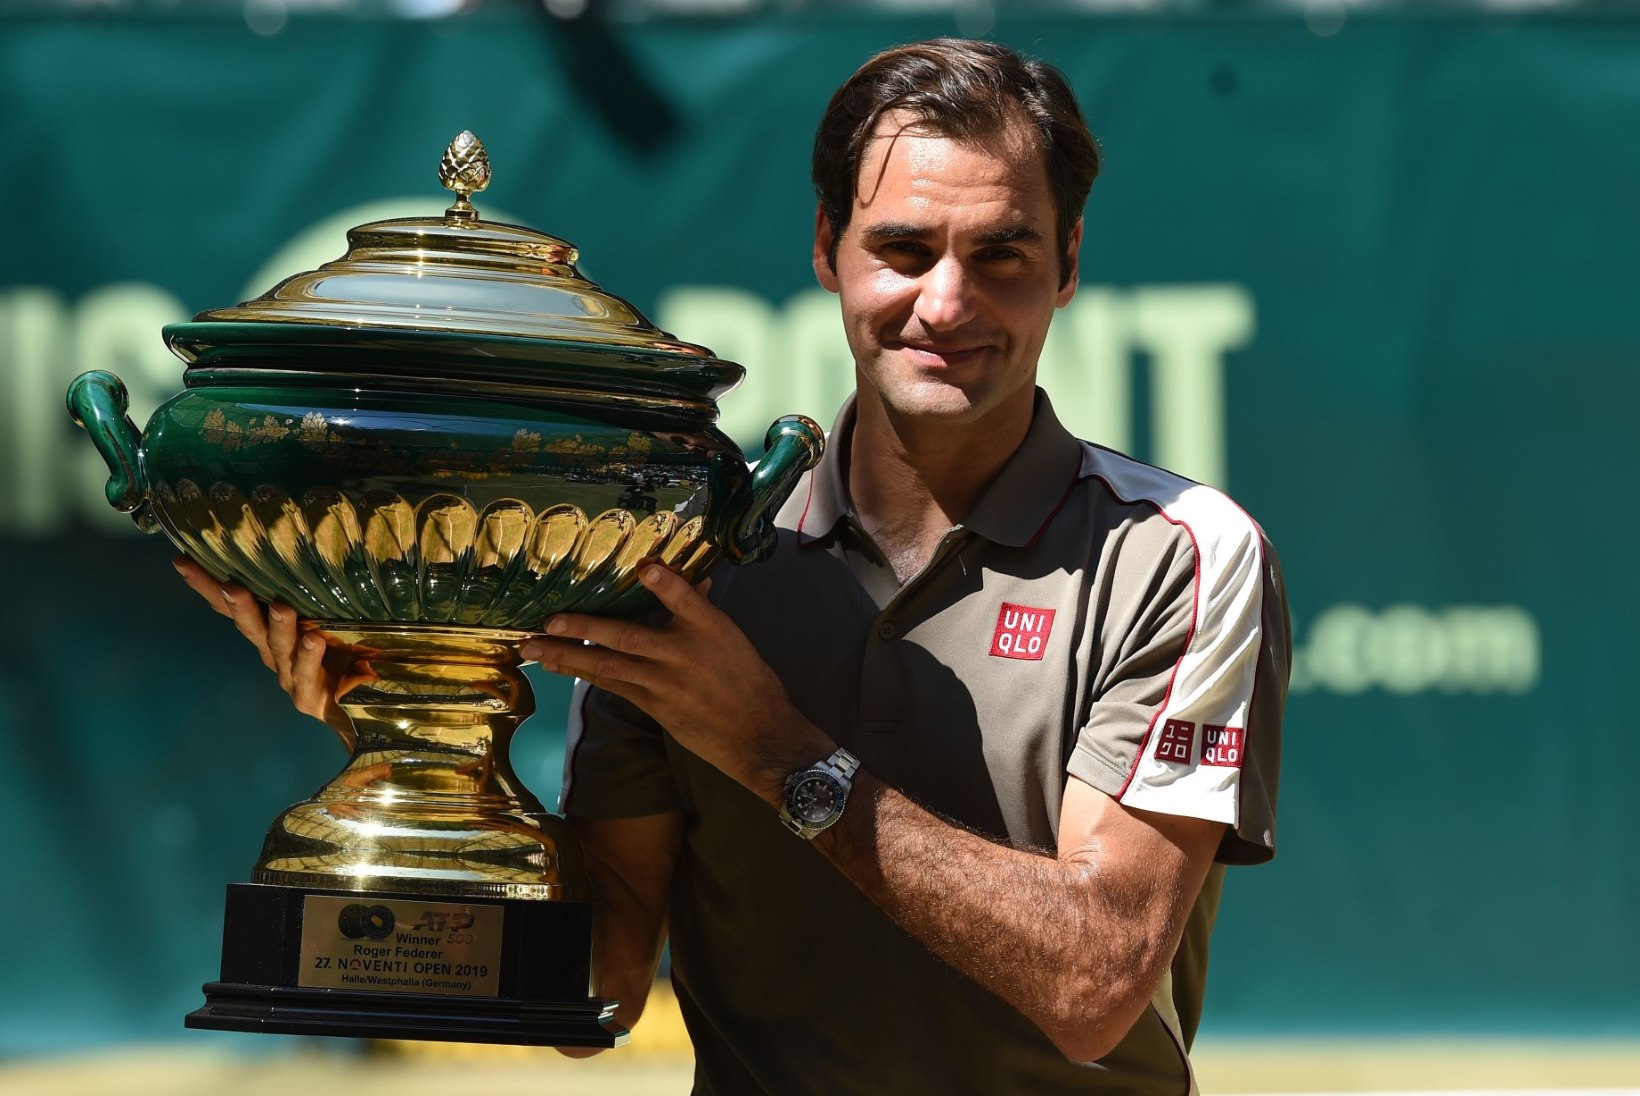 Tenniselegend Roger Federer tekitas Londonis „kaose“